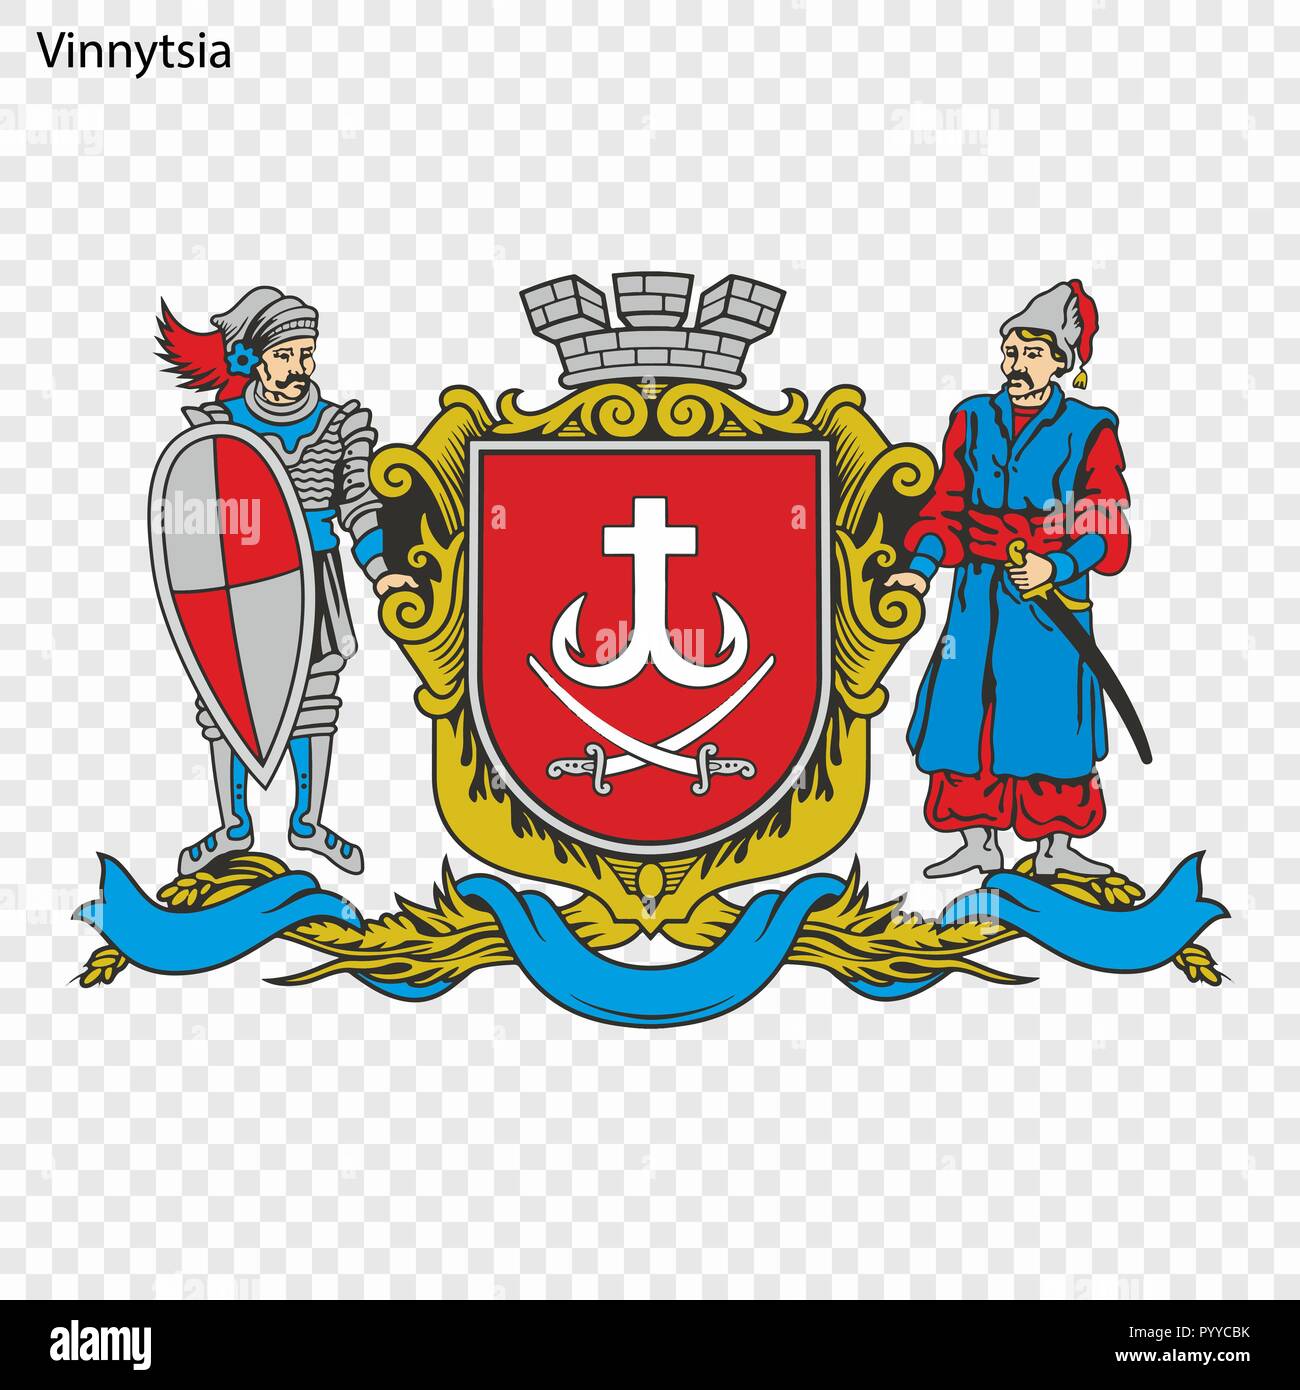 Emblem of Vinnytsia. City of Ukraine. Vector illustration Stock Vector